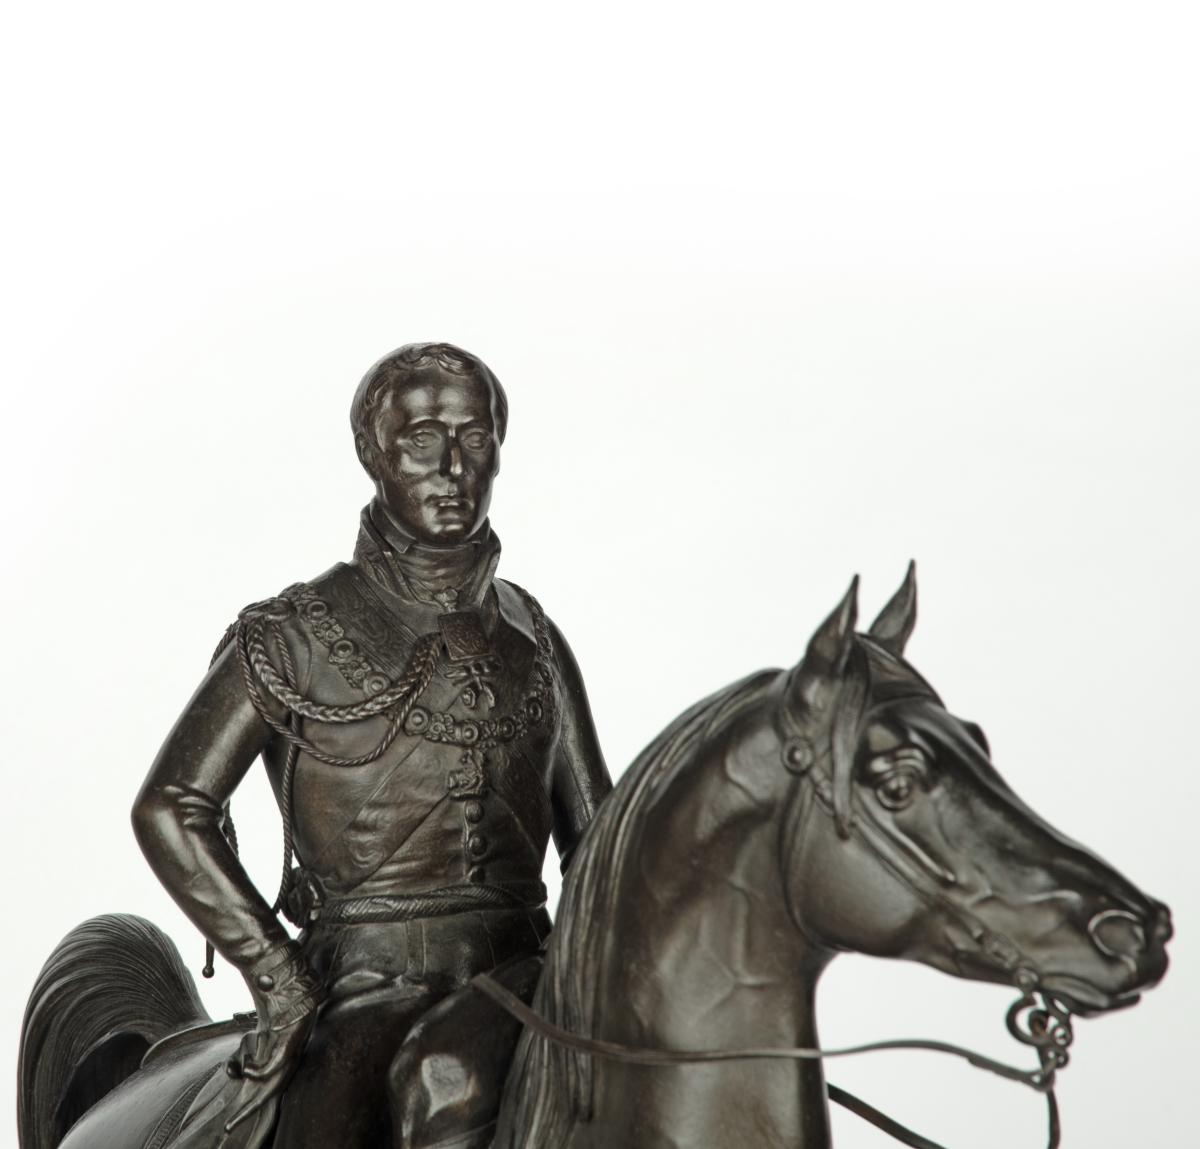 An equestrian statuette of the Duke of Wellington by Morel after Marochetti